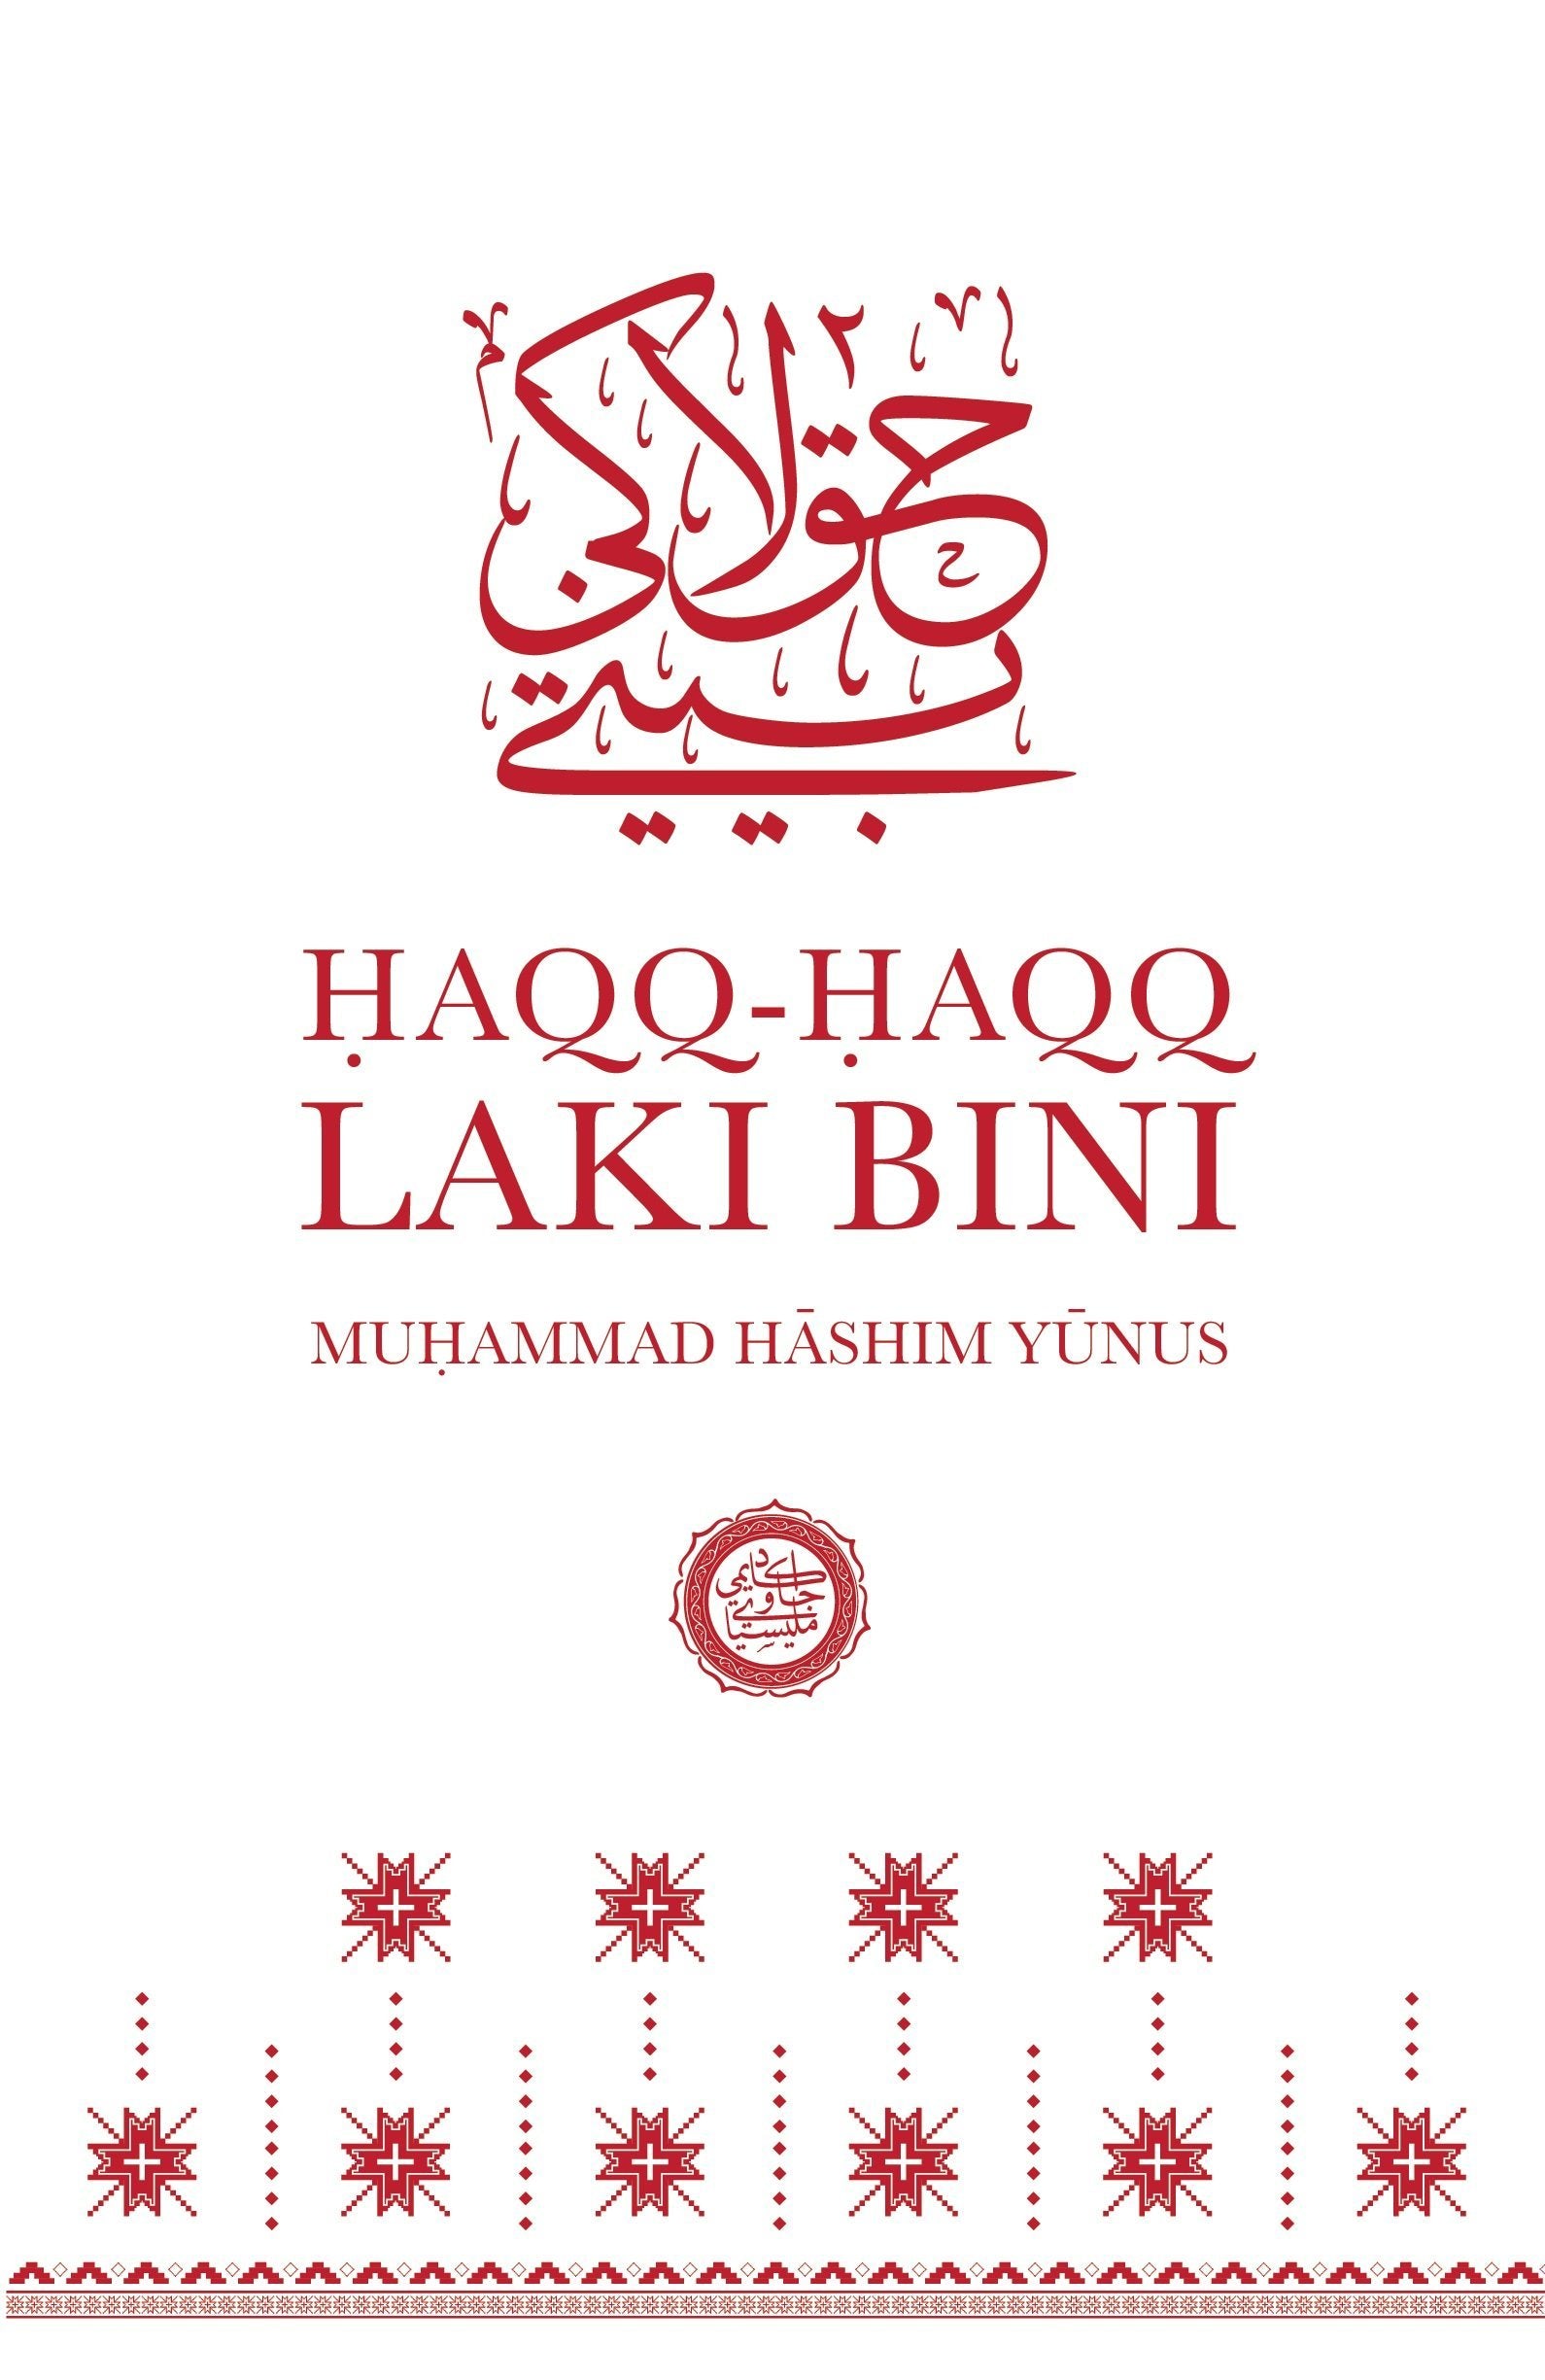 Haqq-haqq Laki Bini - Iman Shoppe Bookstore